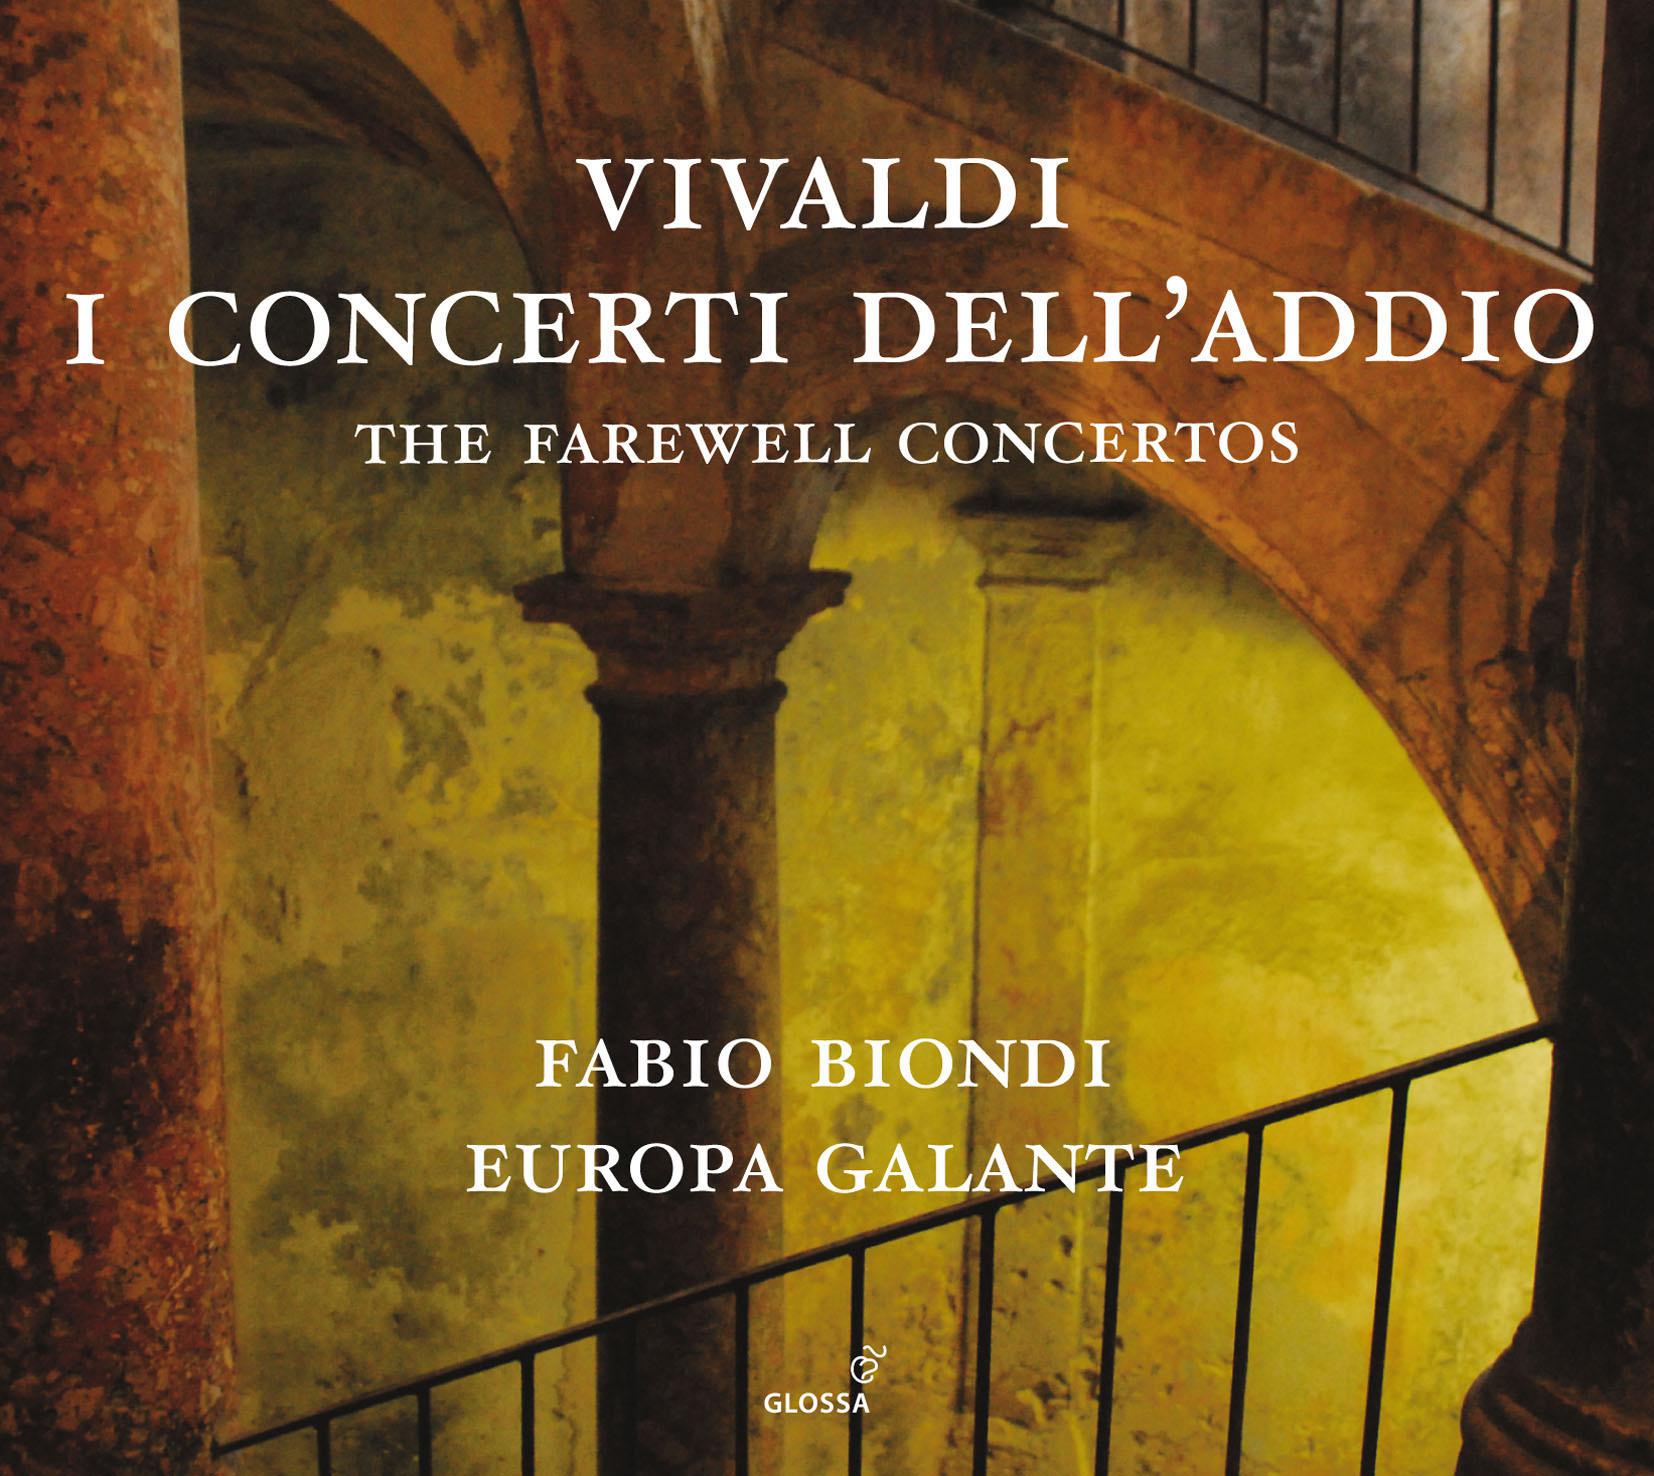 Violin Concerto in B-Flat Major, RV 371: III. Allegro